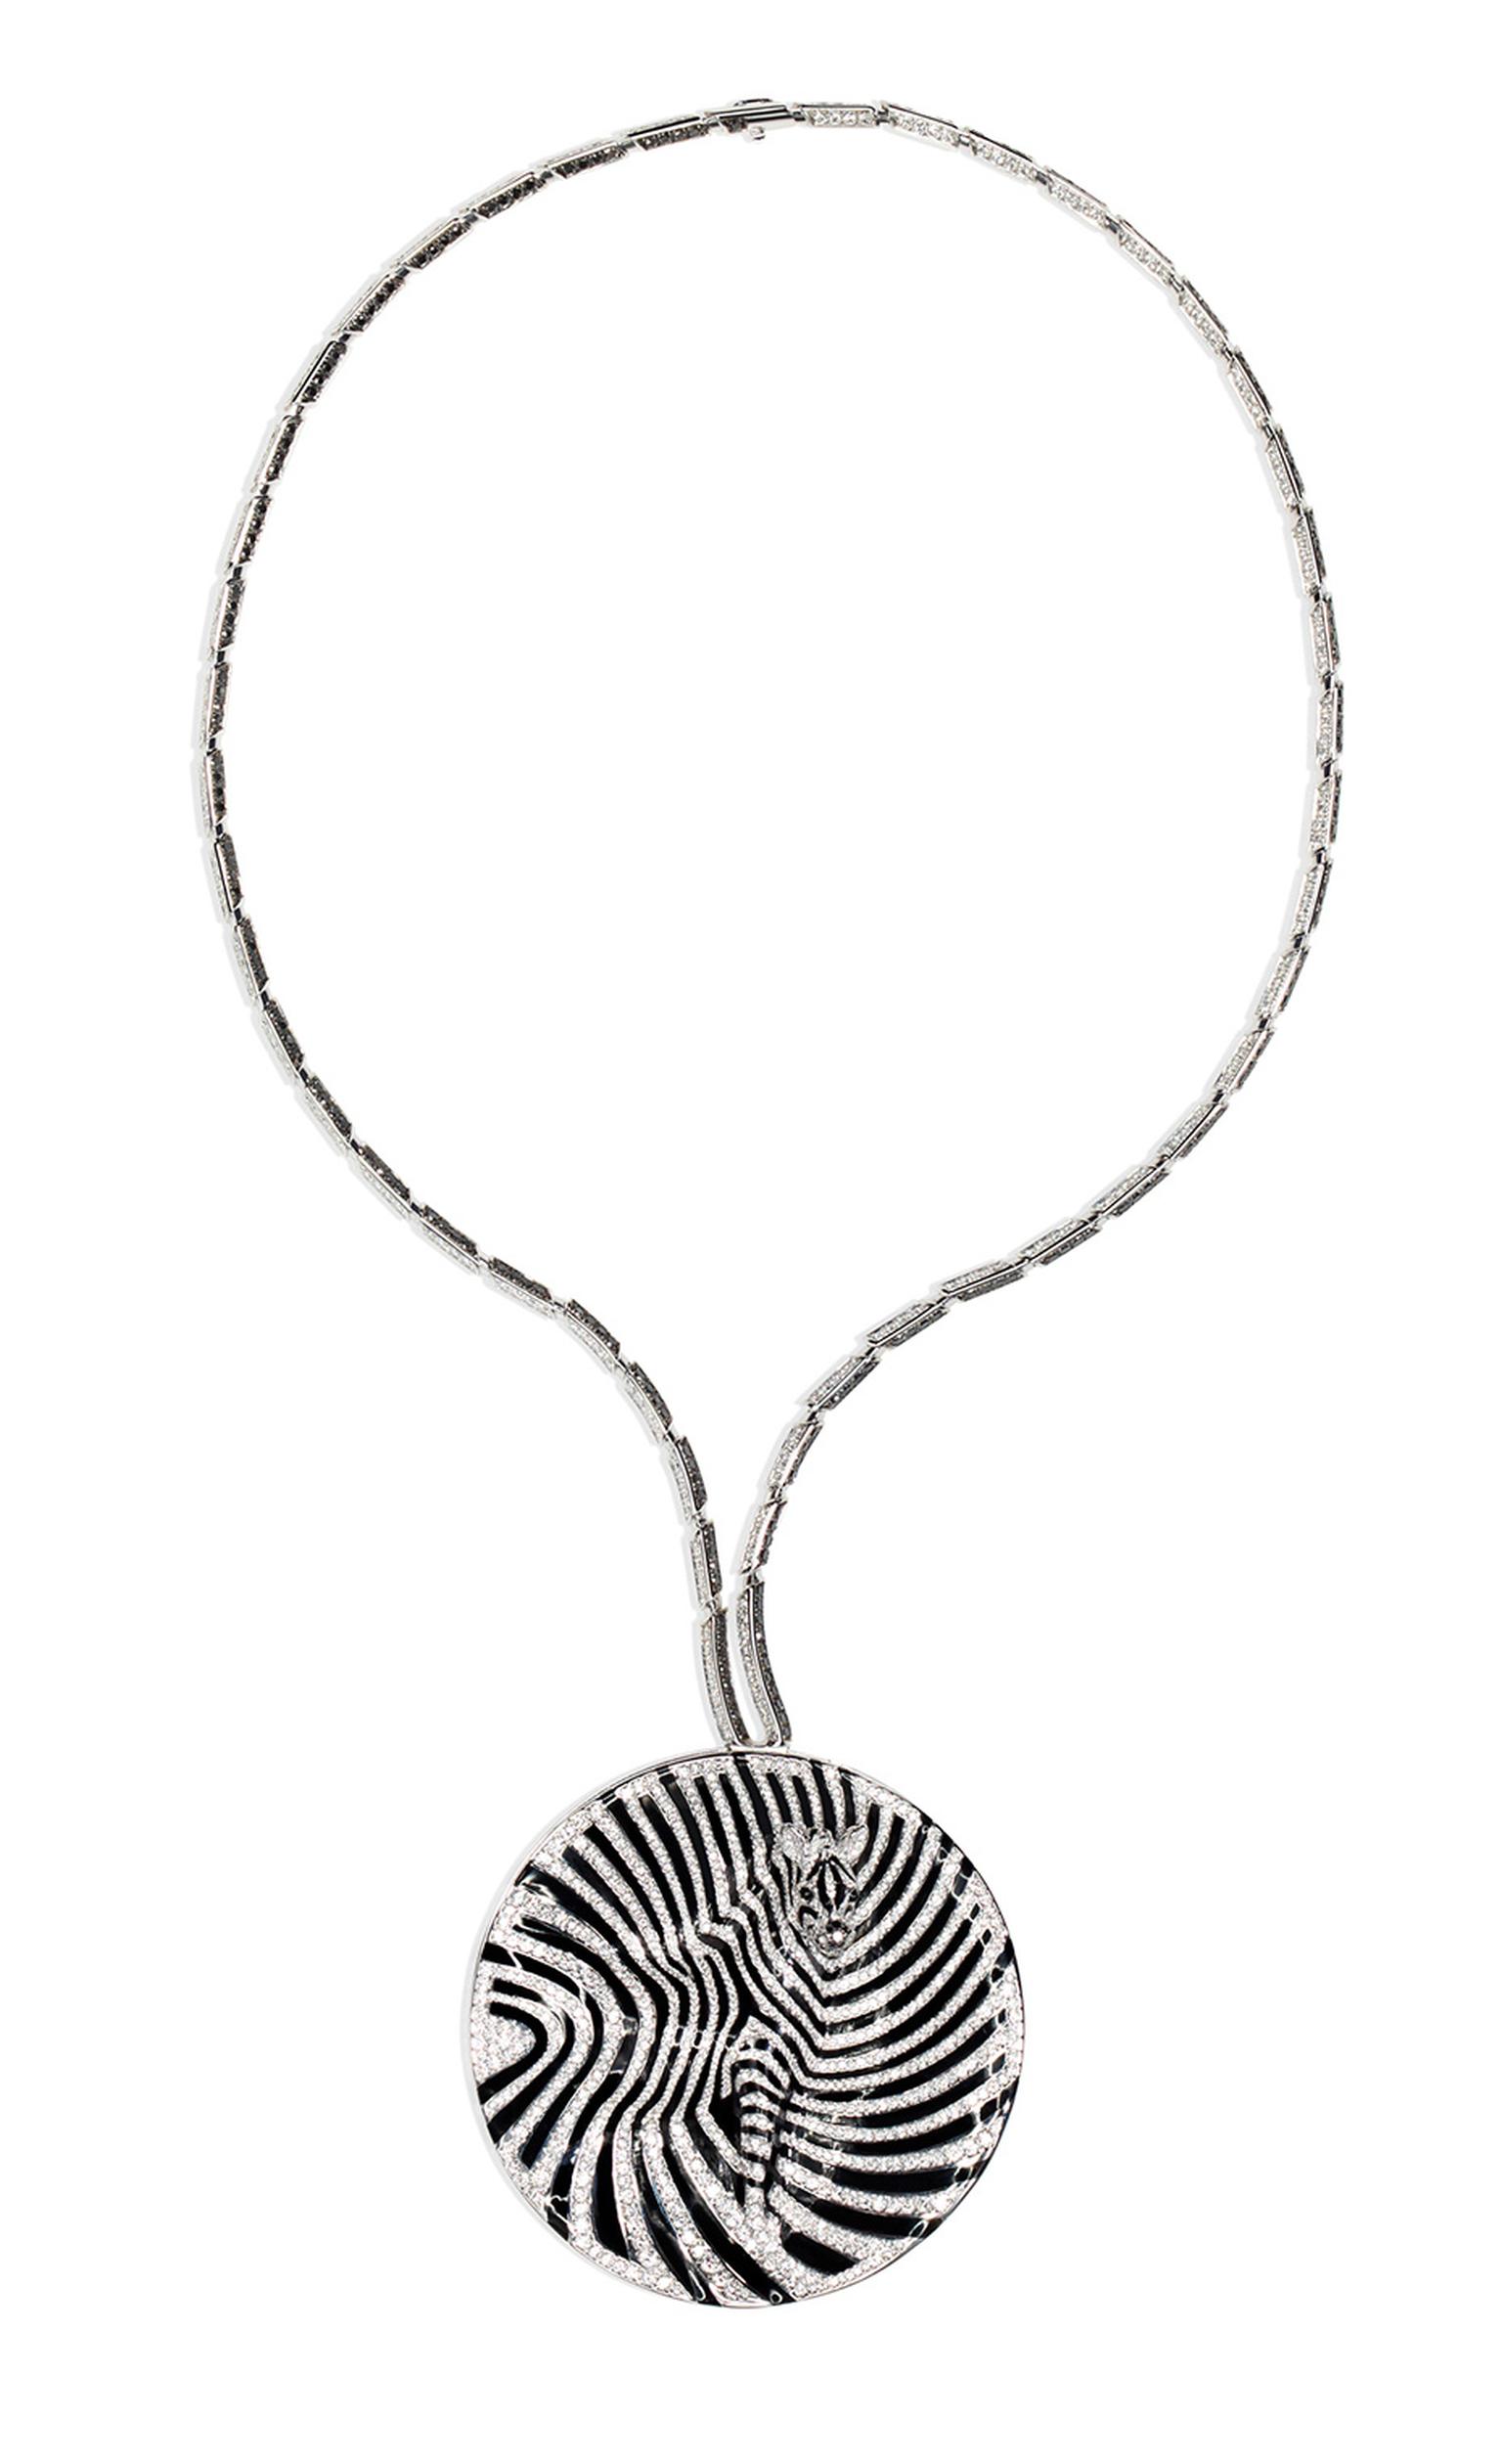 Chopard Animal World Zebra necklace with white and black diamonds